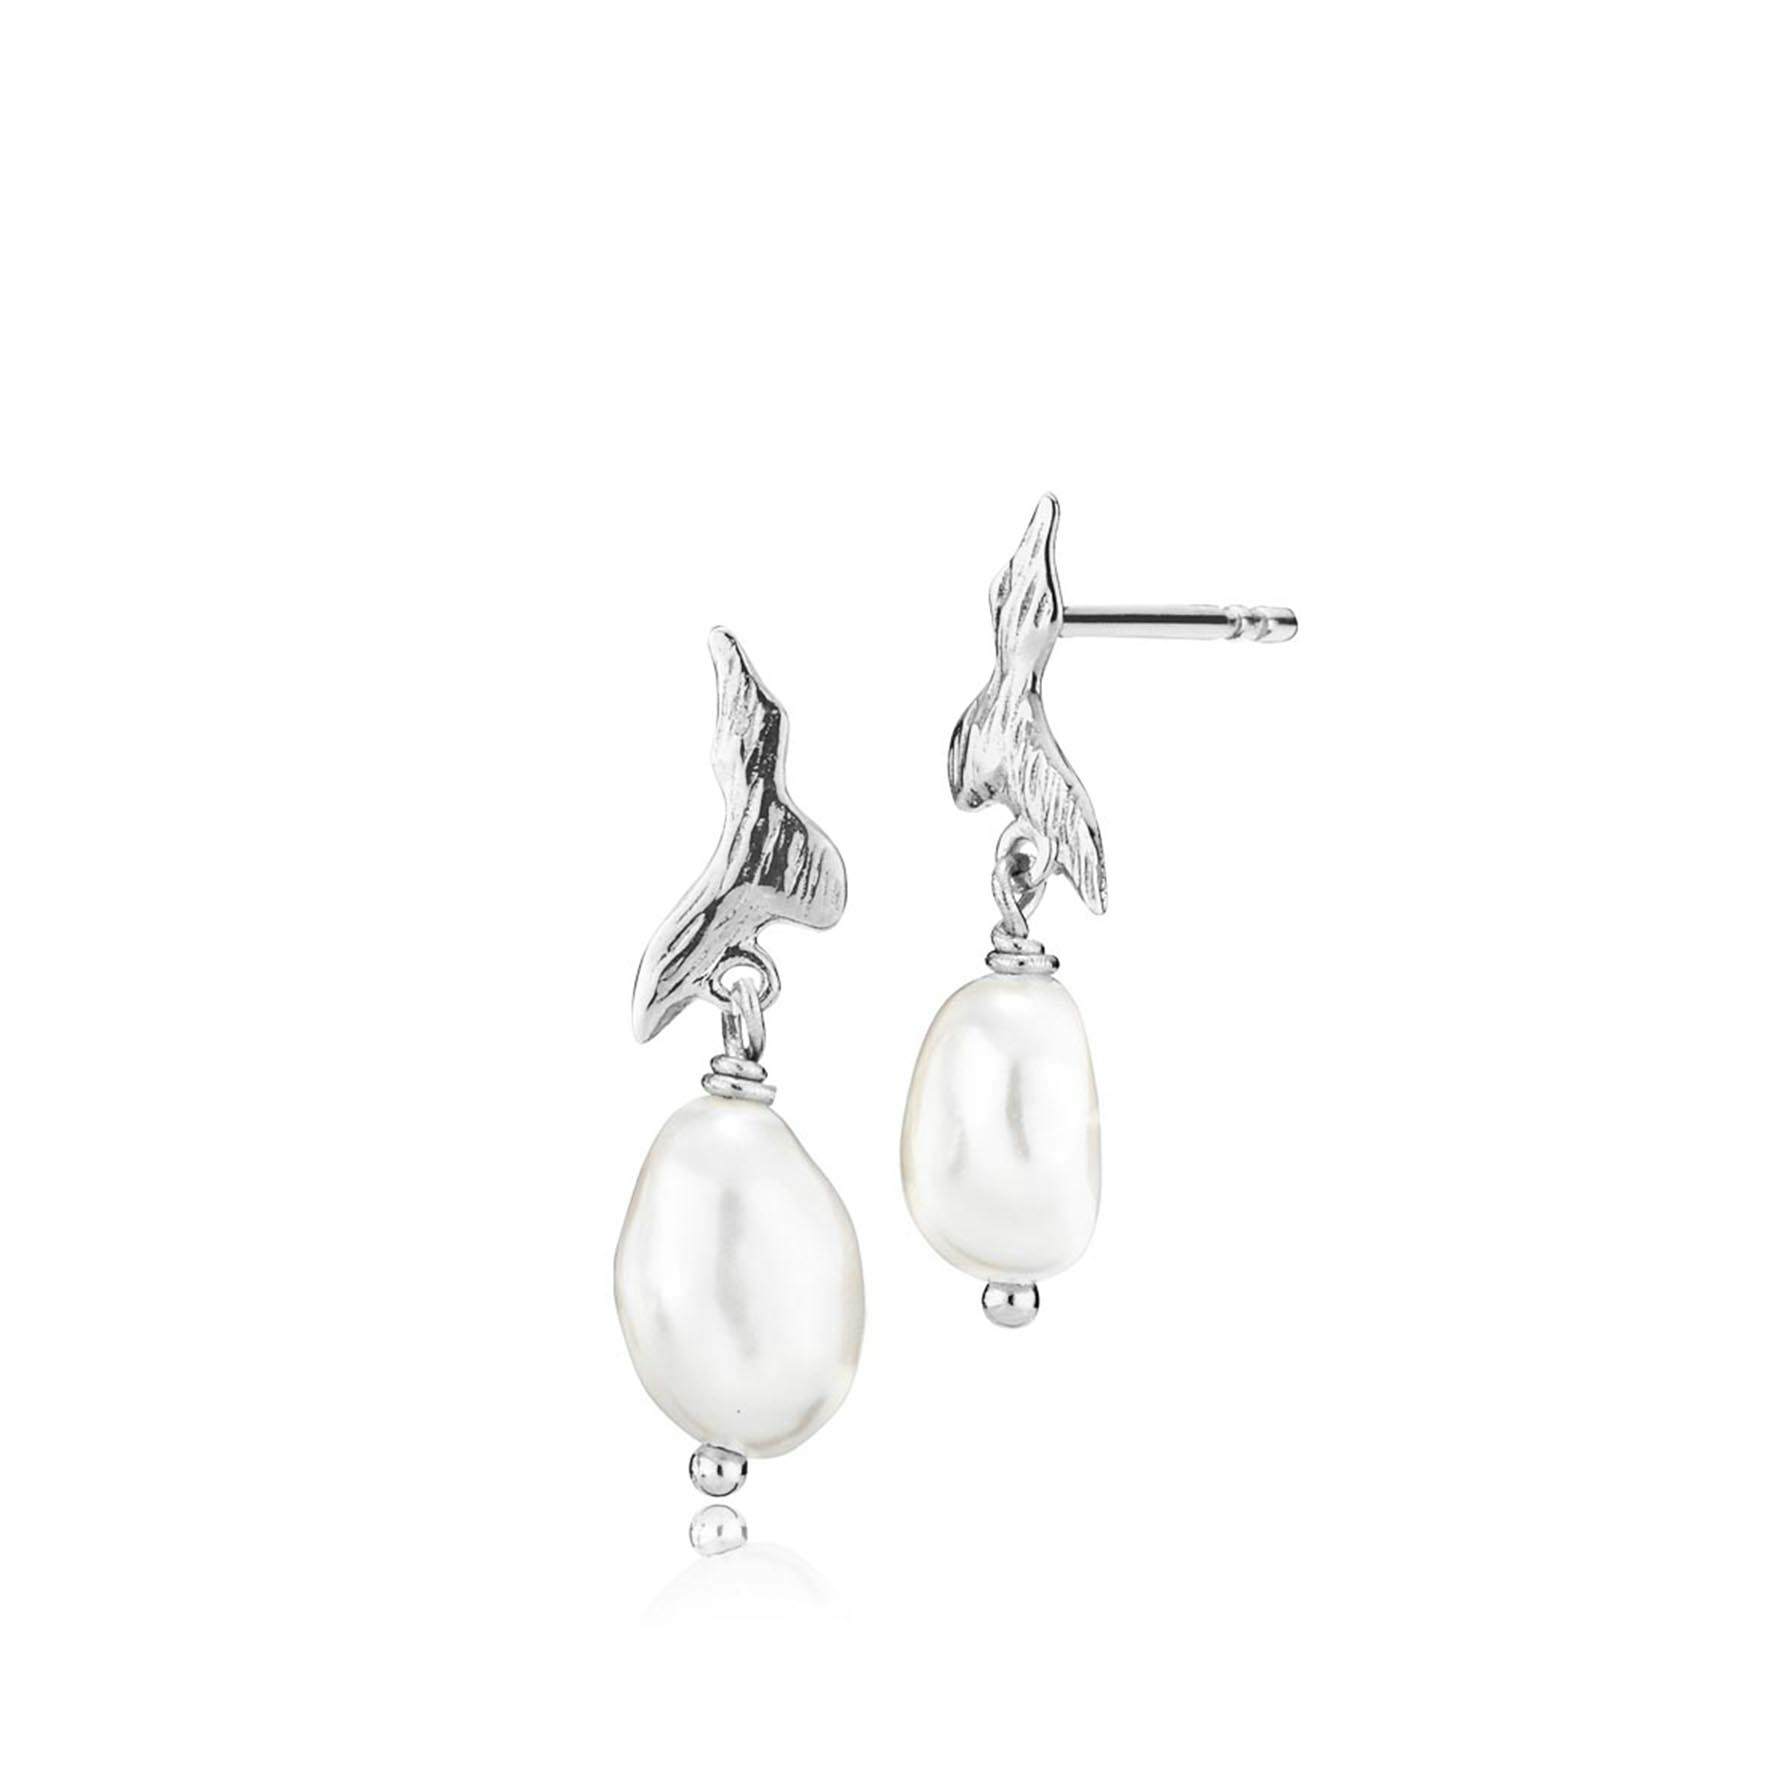 Fairy Earrings With Pearl fra Izabel Camille i Sølv Sterling 925|Freshwater Pearl